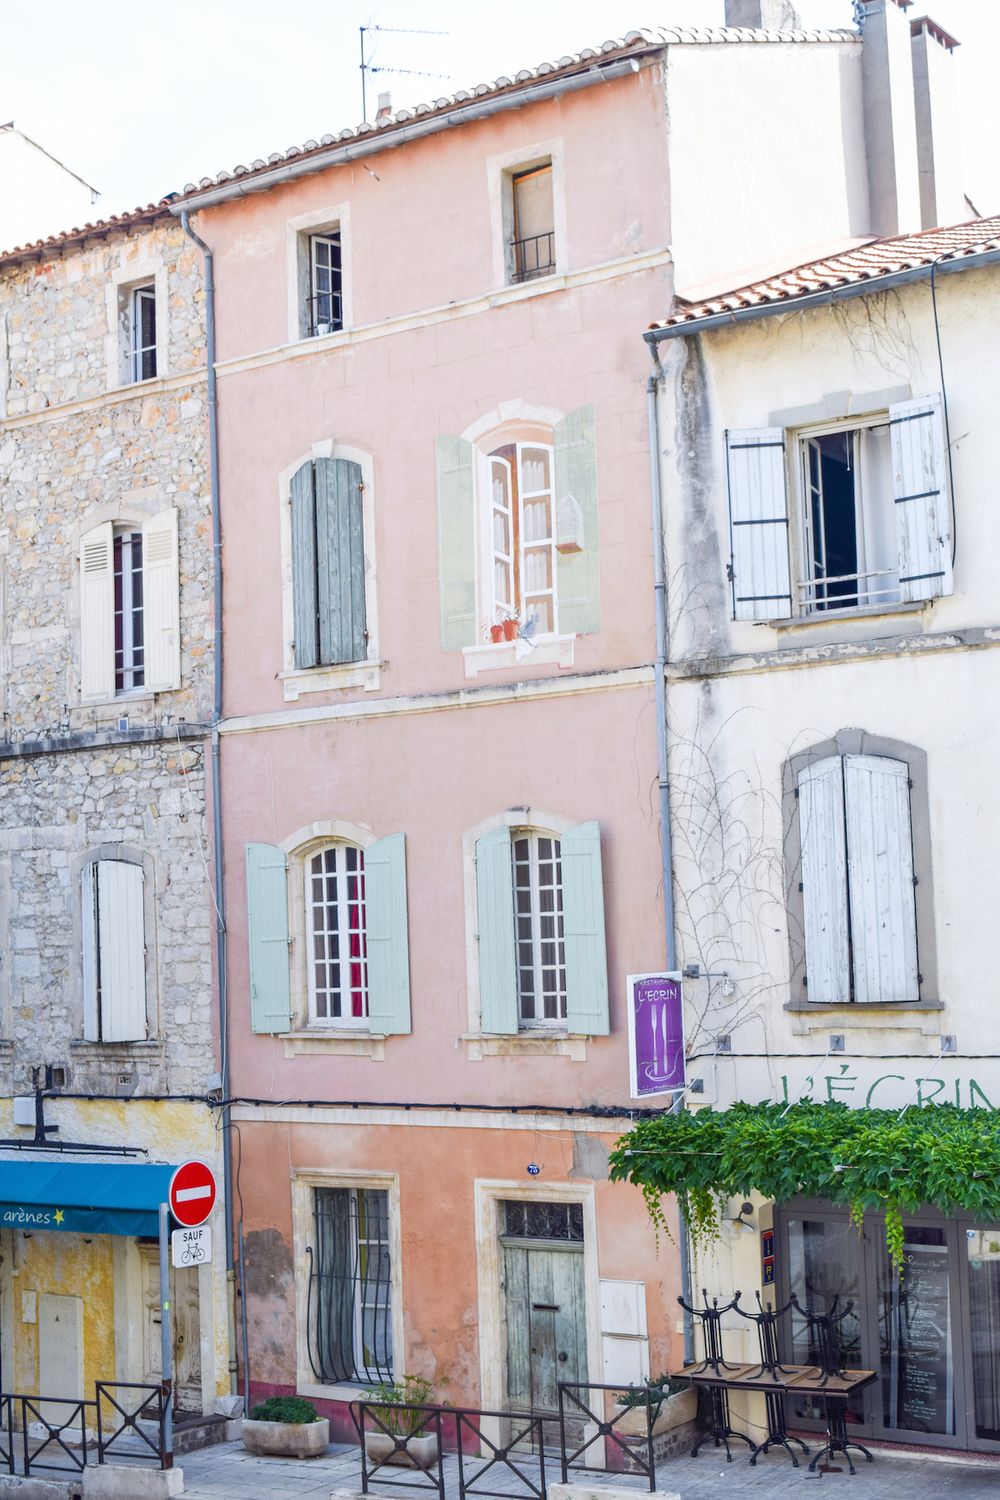 Trompe l'Oeil architecture in Arles France